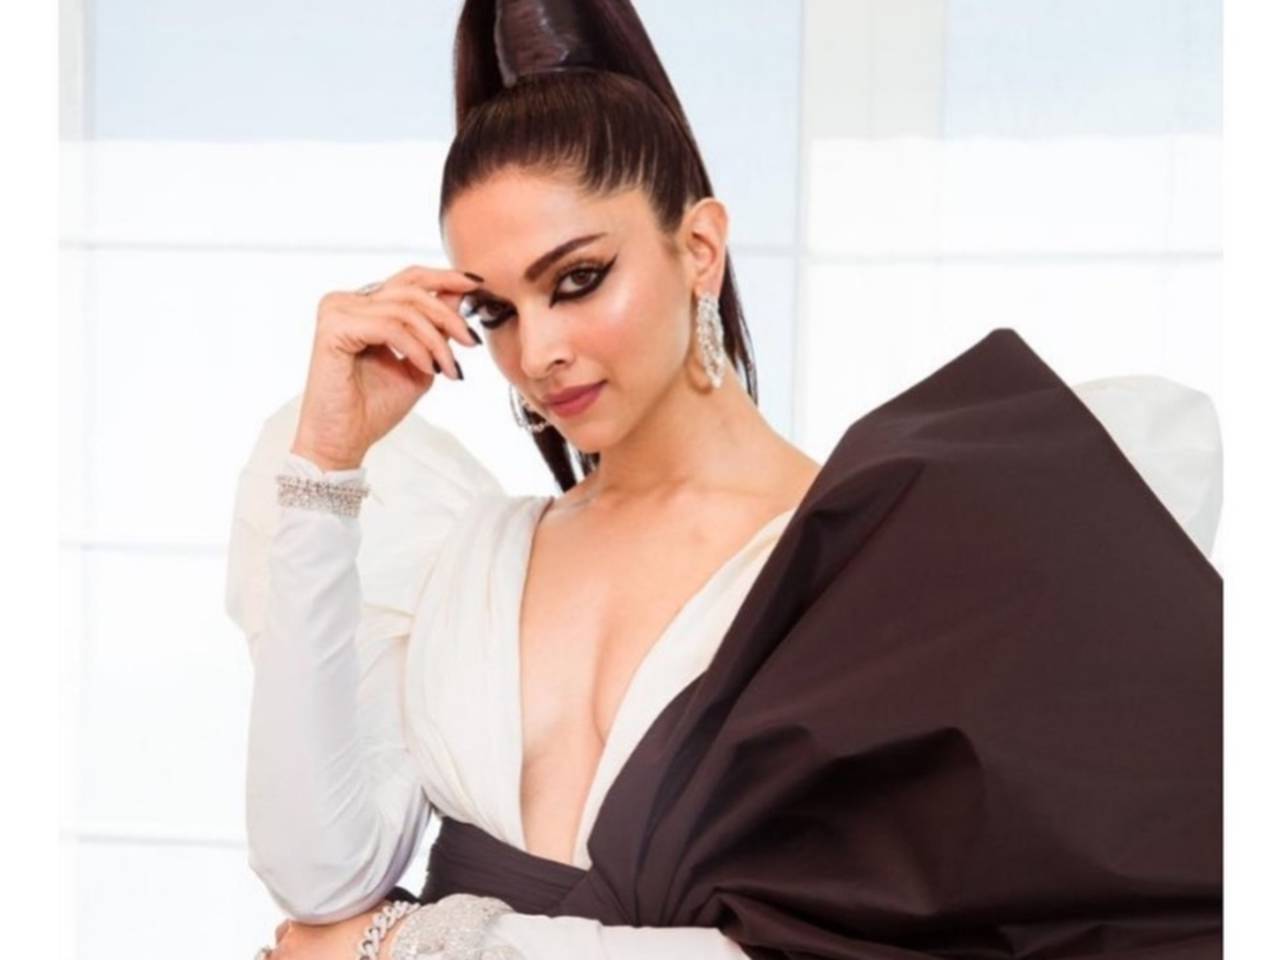 Deepika Padukone For Vogue India 2019 August Photoshoot